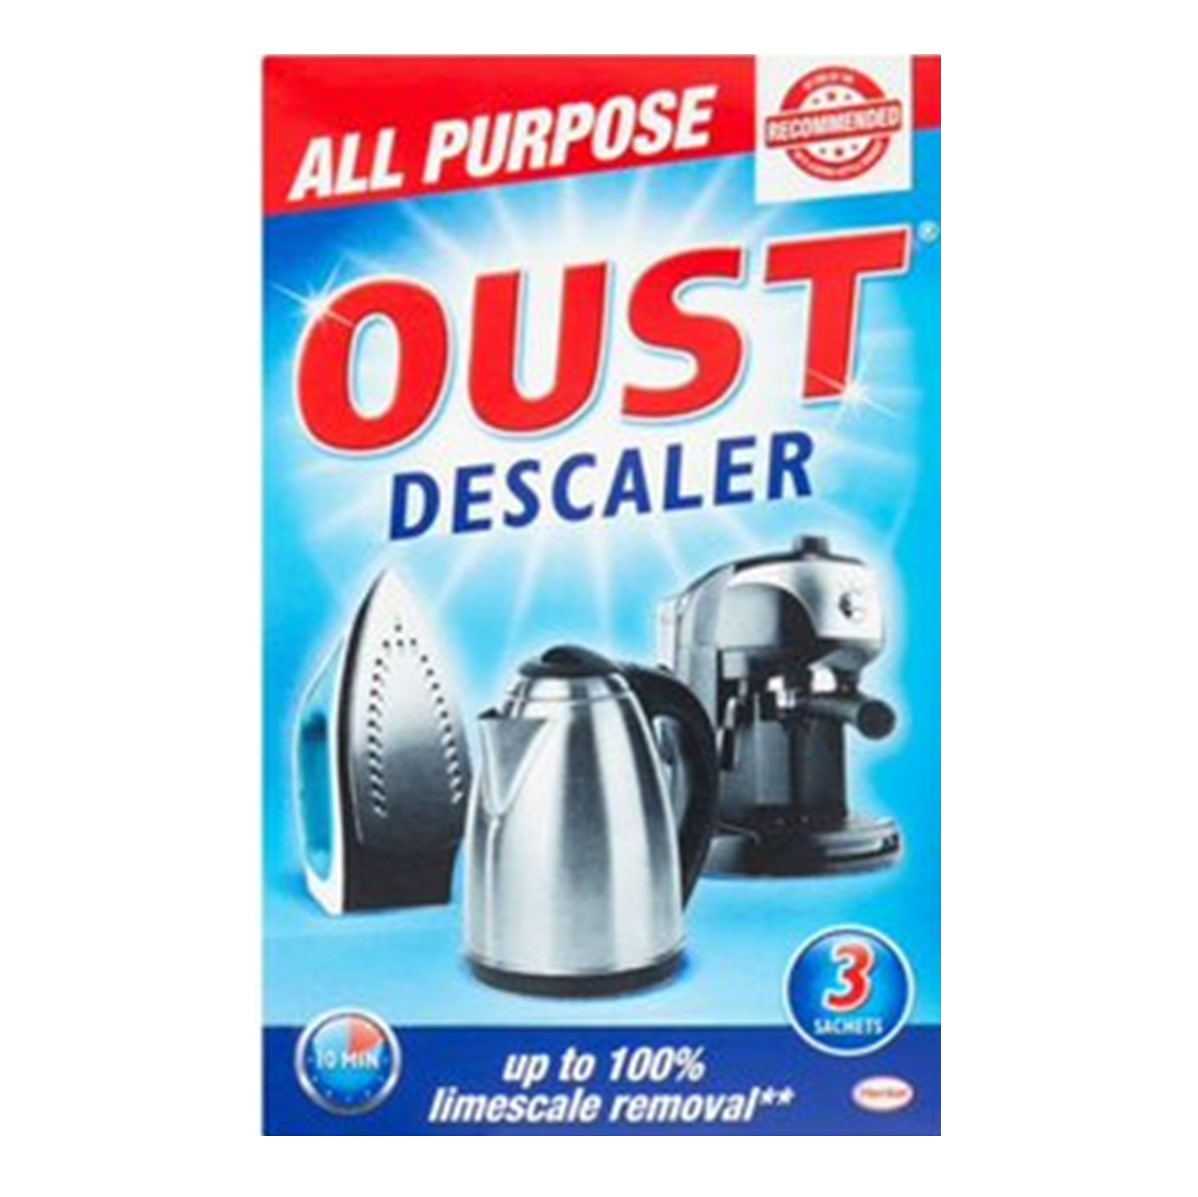 Oust All Purpose Descaler - 3x25ml sachets